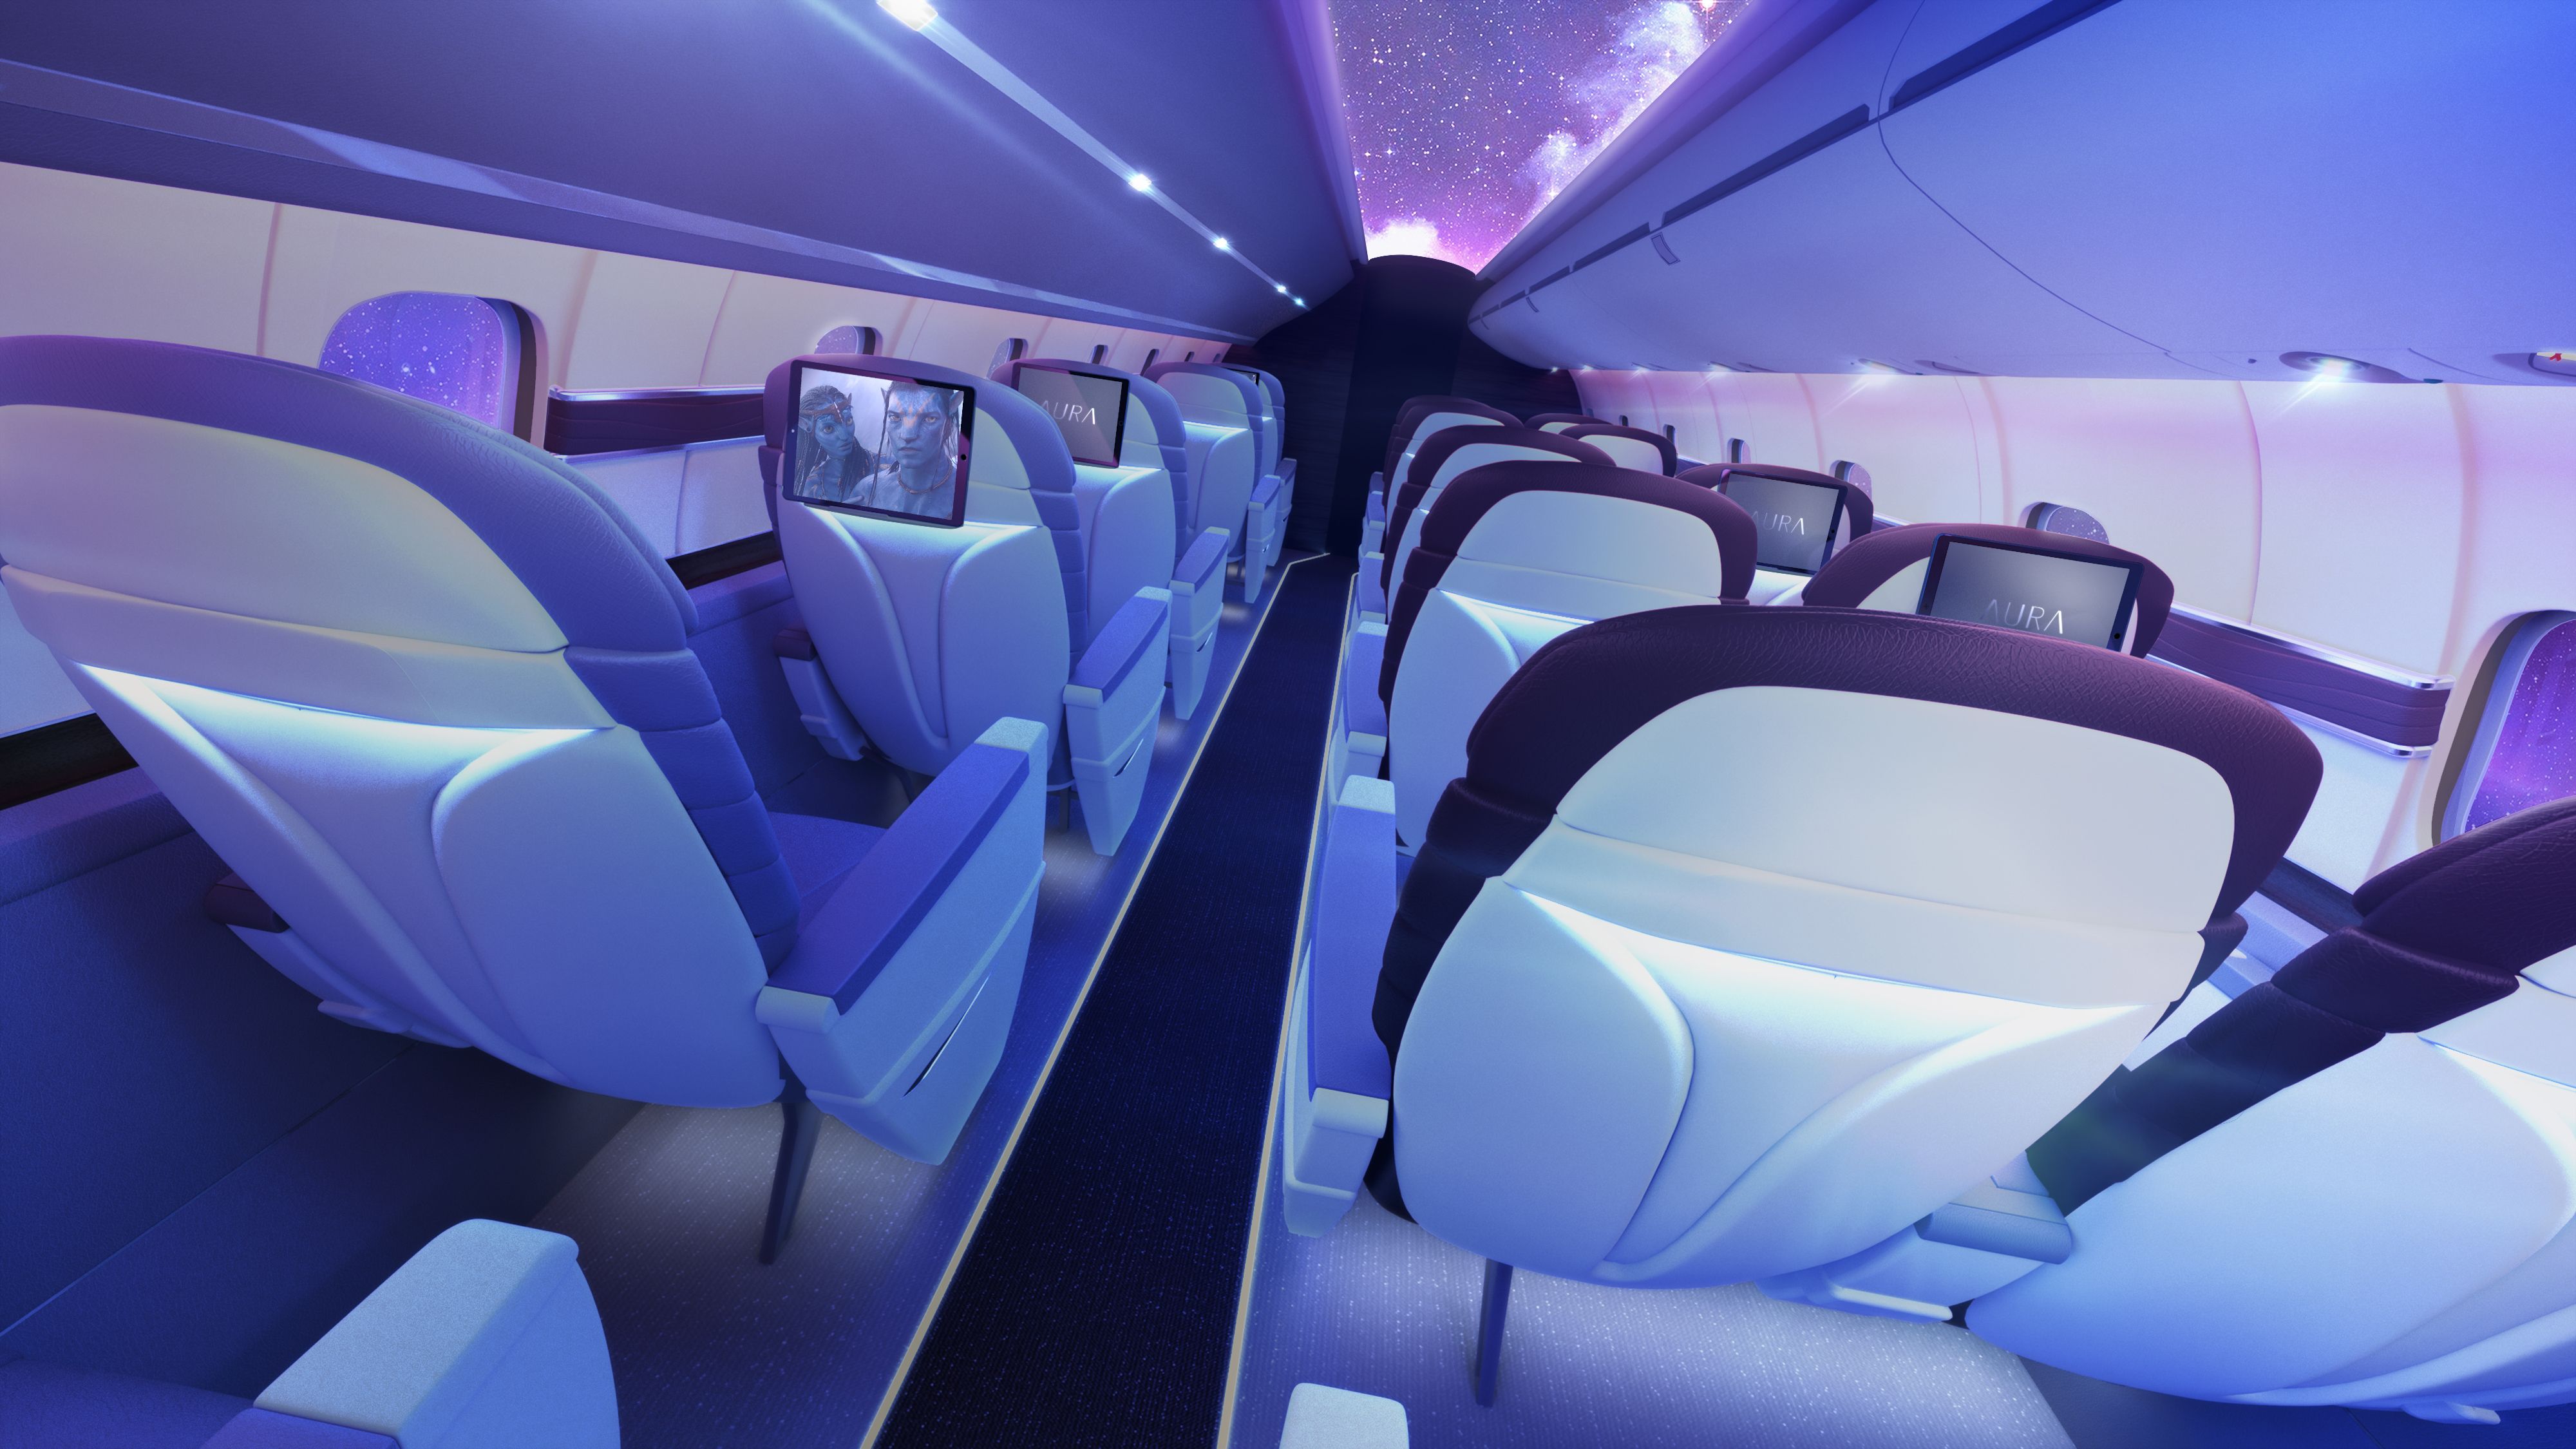 ZED Aerospace reveals technologies never before seen on aircraft.